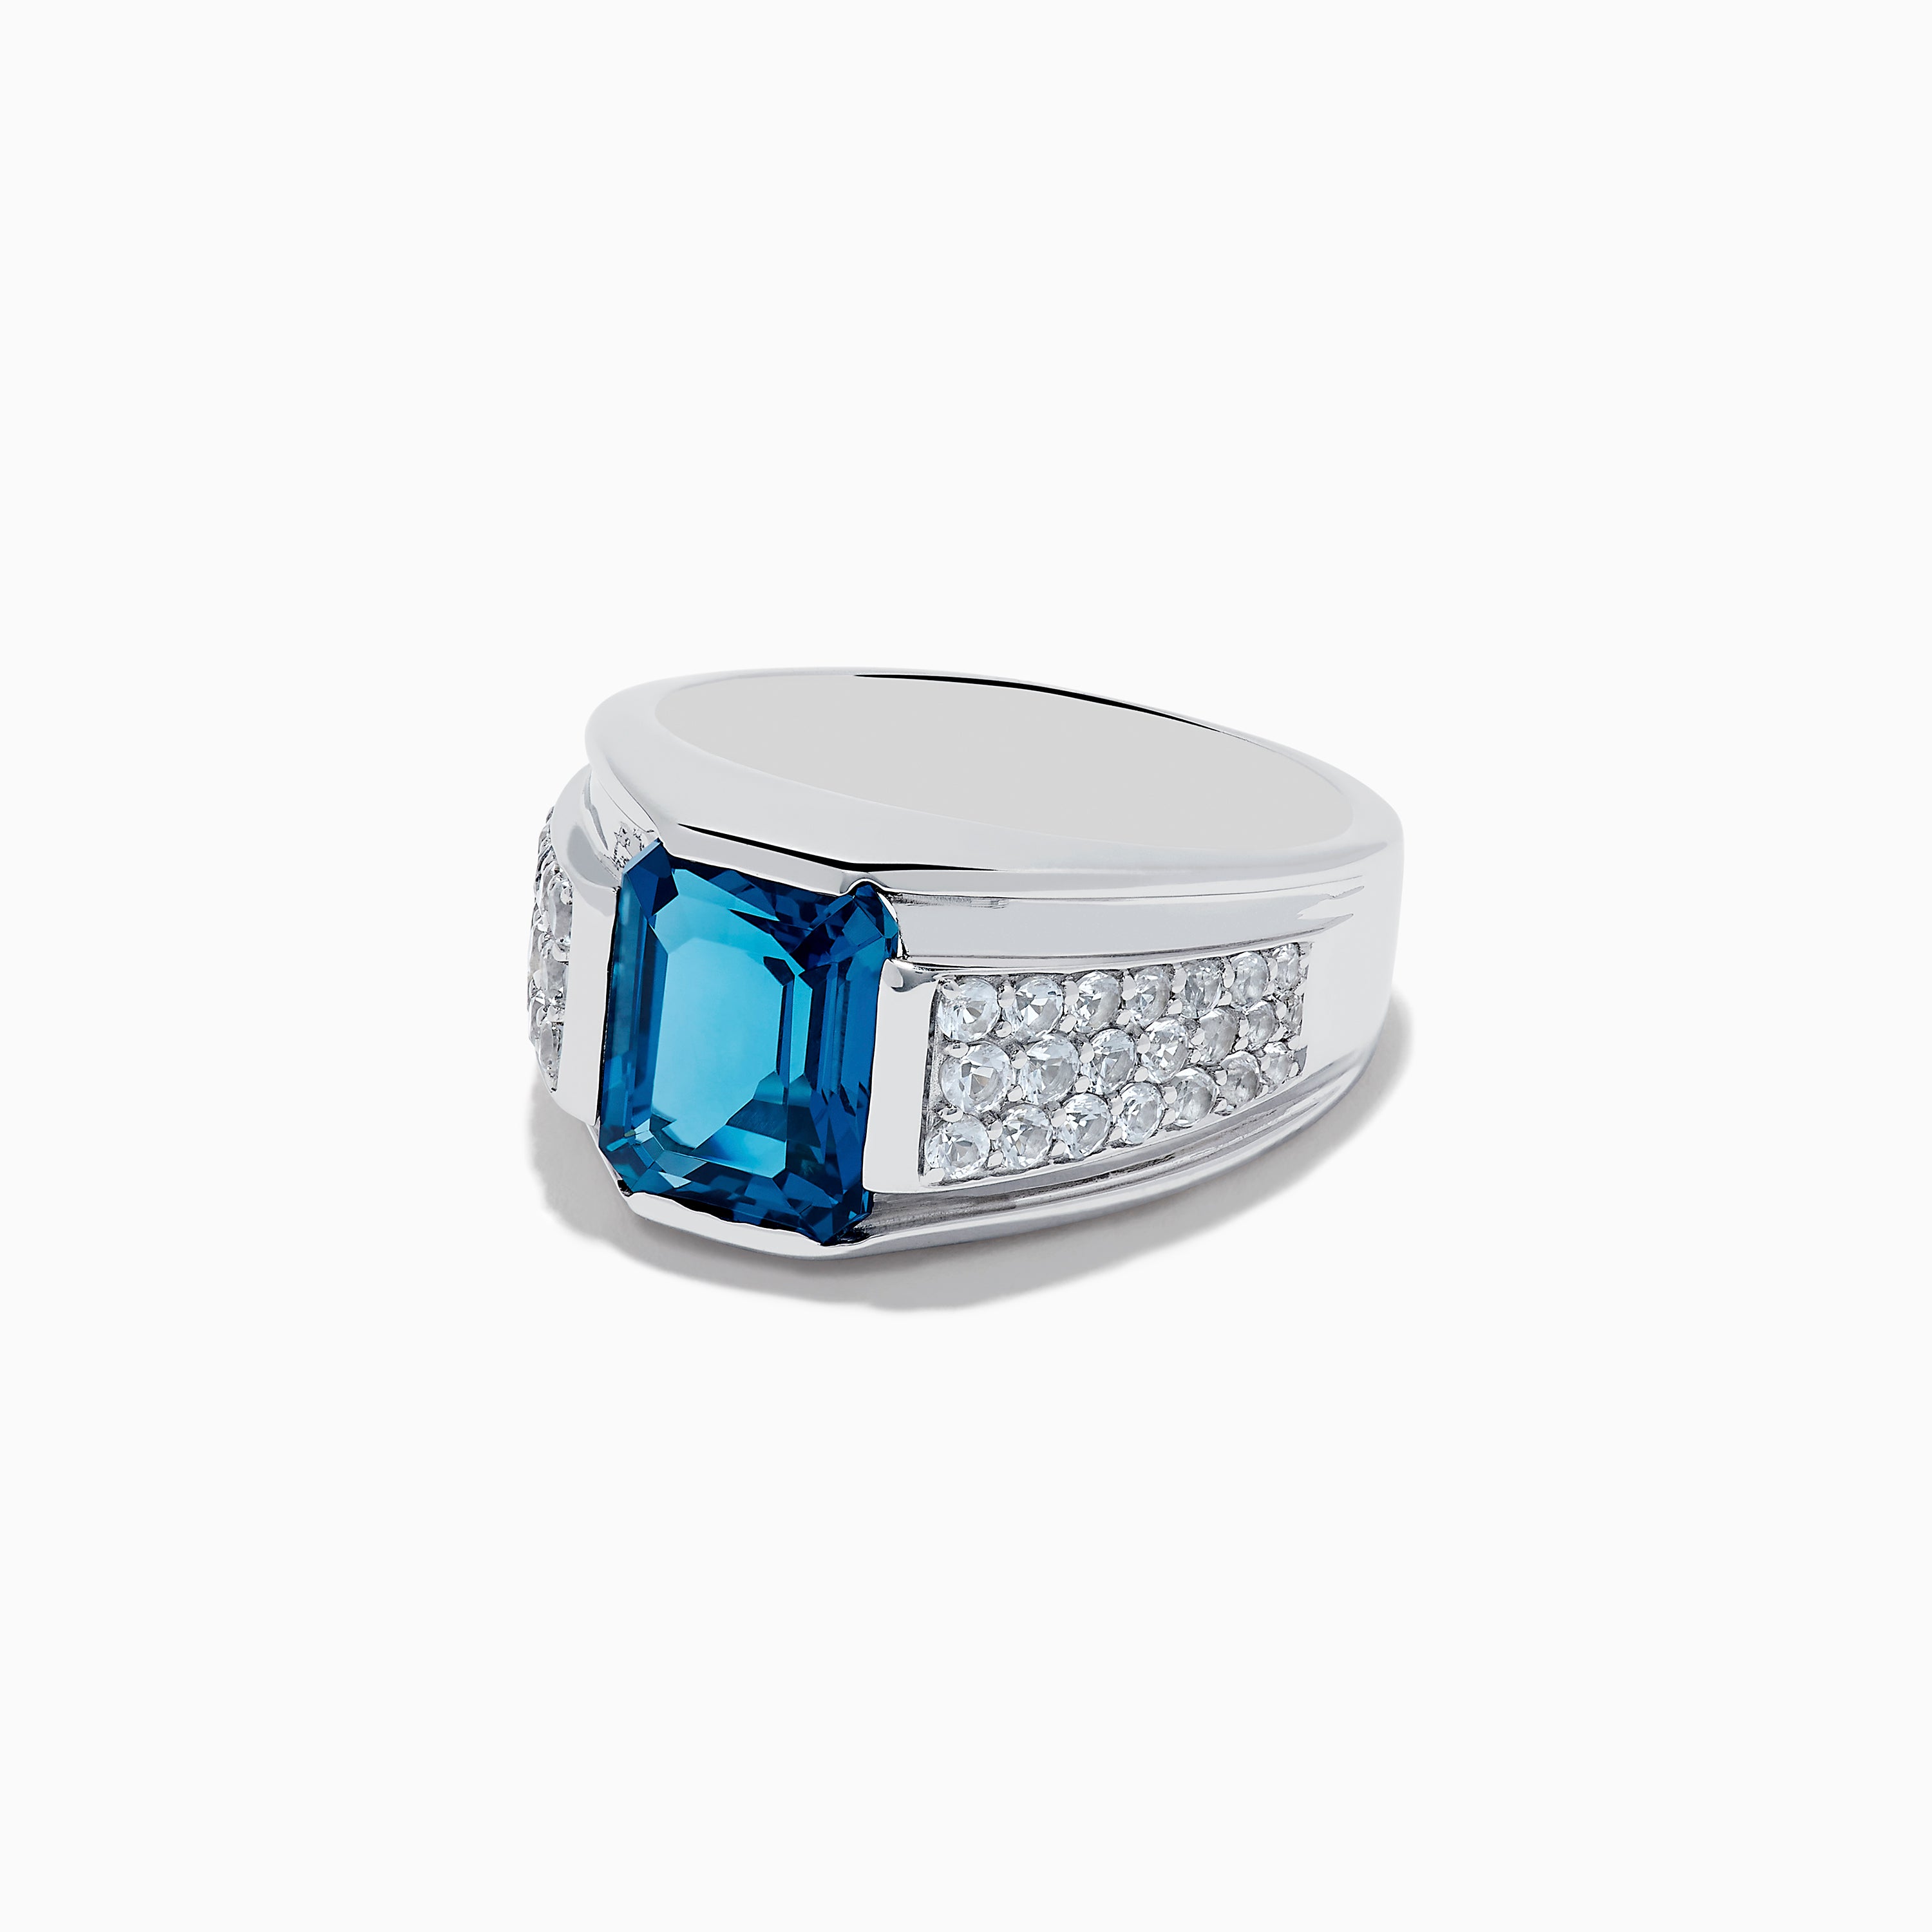 Effy Men's 925 Sterling Silver Blue and White Topaz Ring